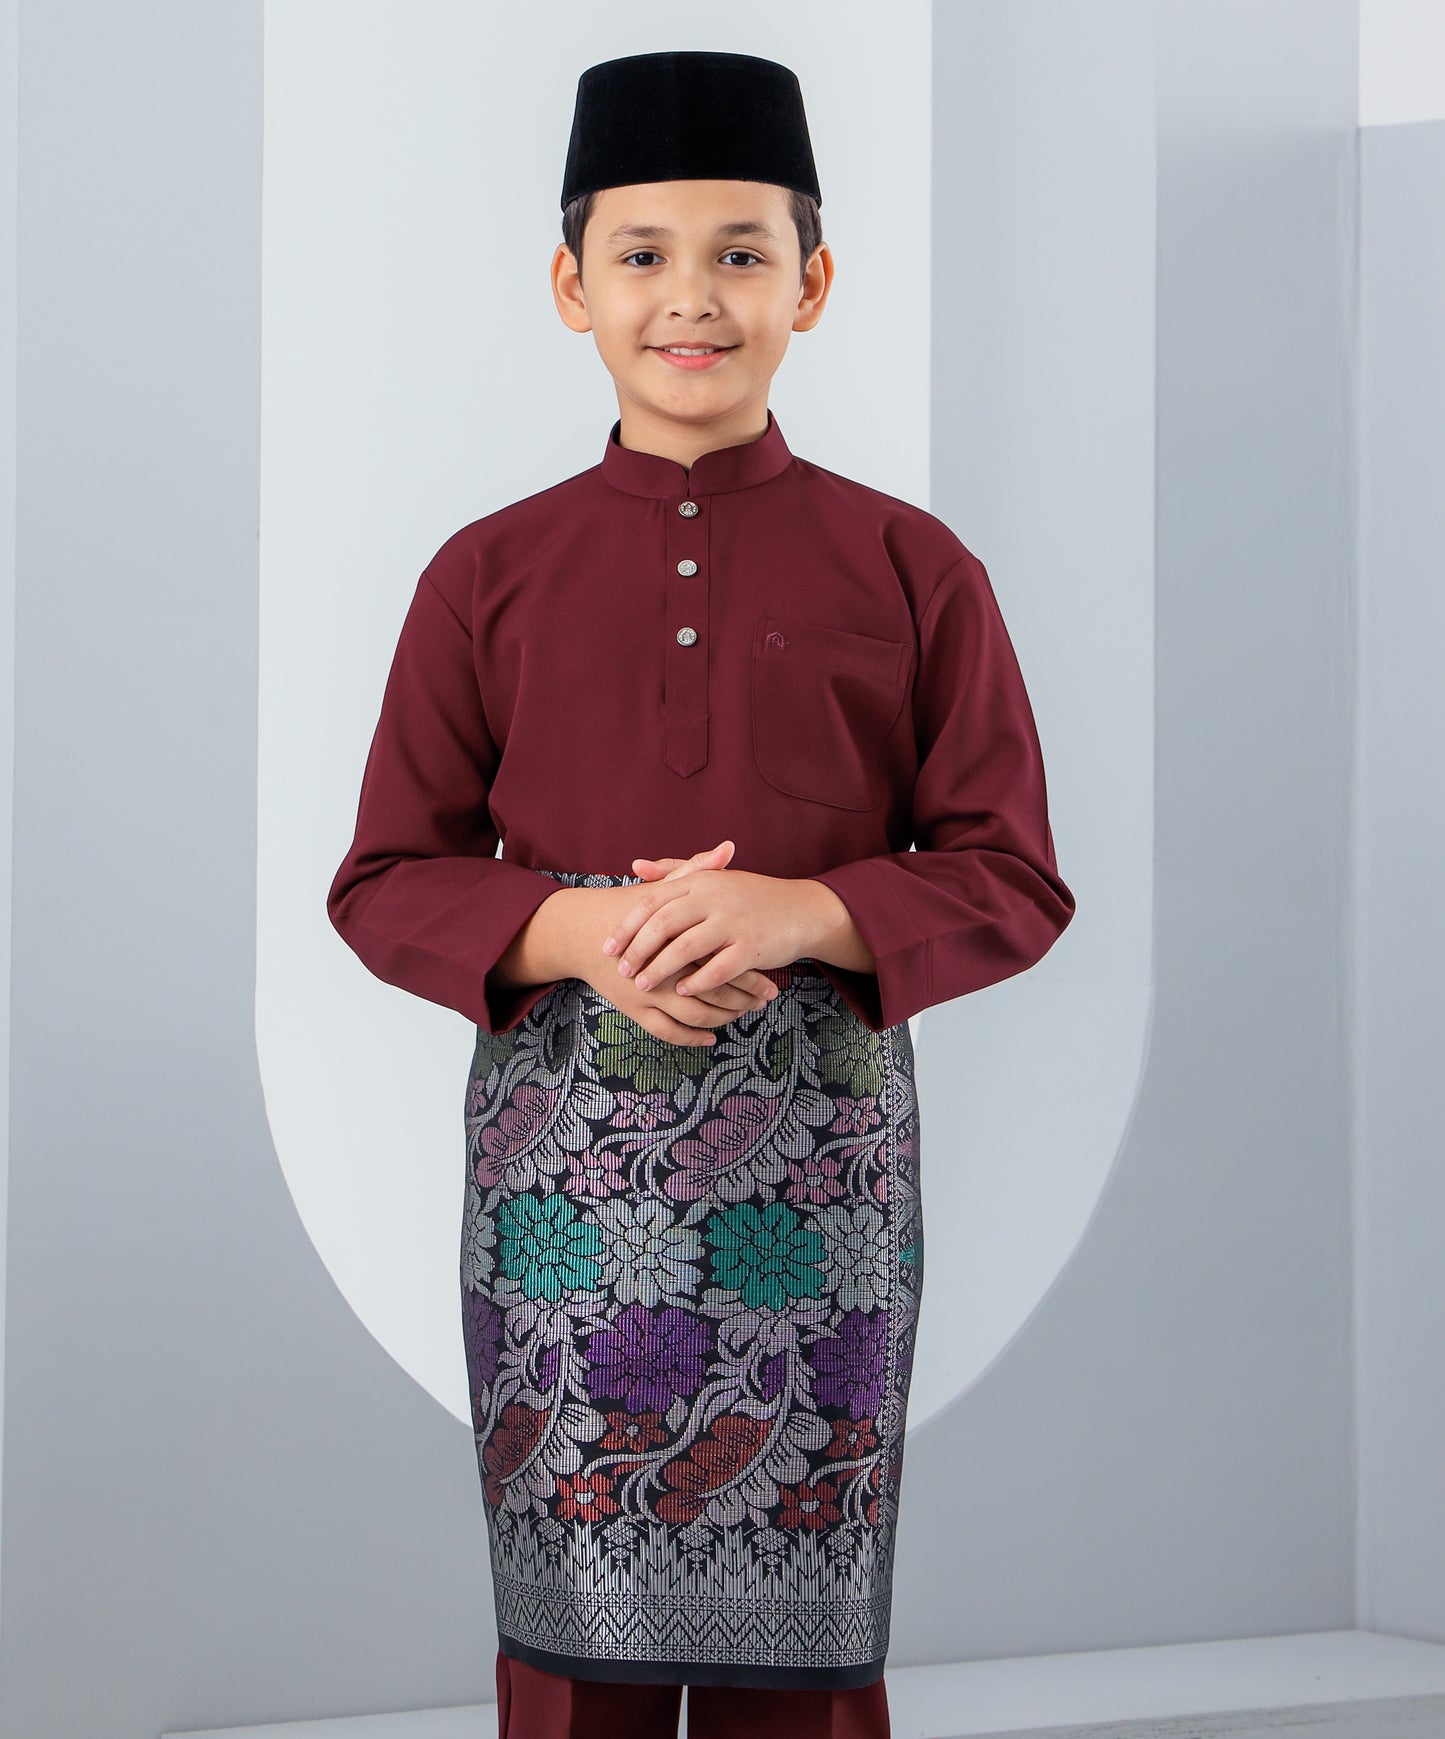 Baju Melayu Haseki Kids - Maroon